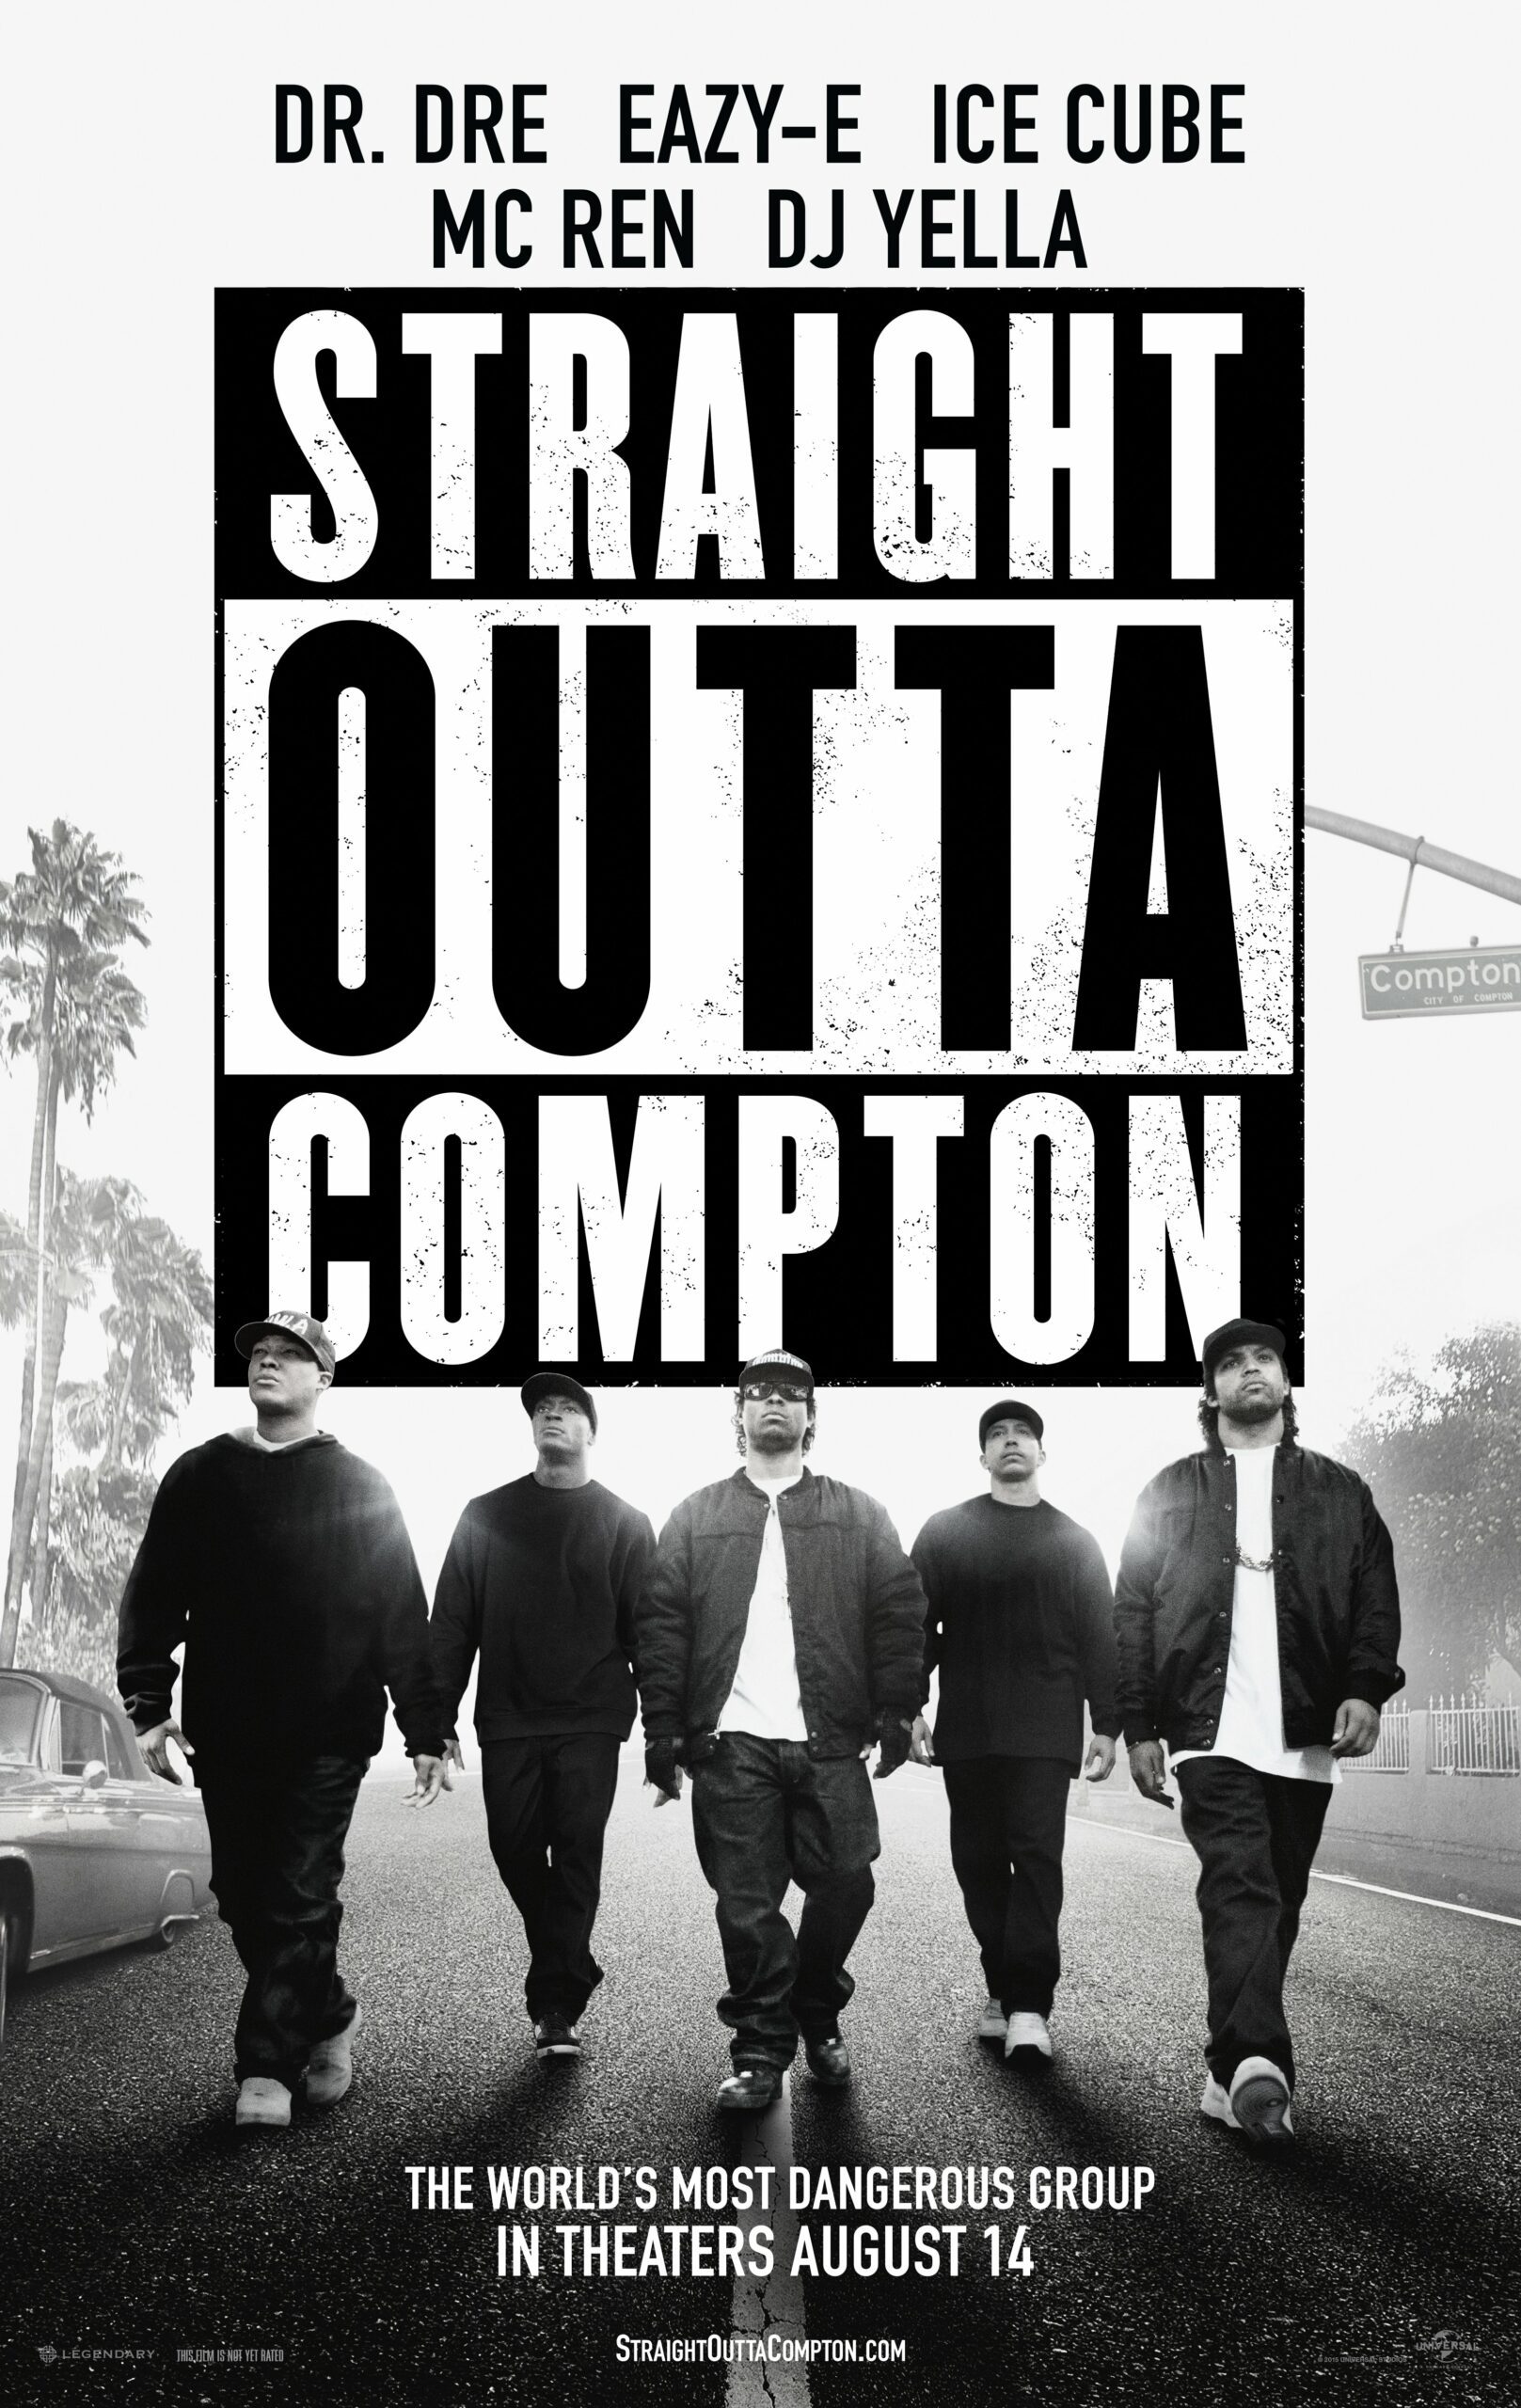 Poster du film NWA: Straight Outta Compton réalisé par F. Gary Gray avec O’Shea Jackson Jr., Corey Hawkins, Jason Mitchell, Neil Brown Jr., Aldis Hodge et Marlon Yates Jr